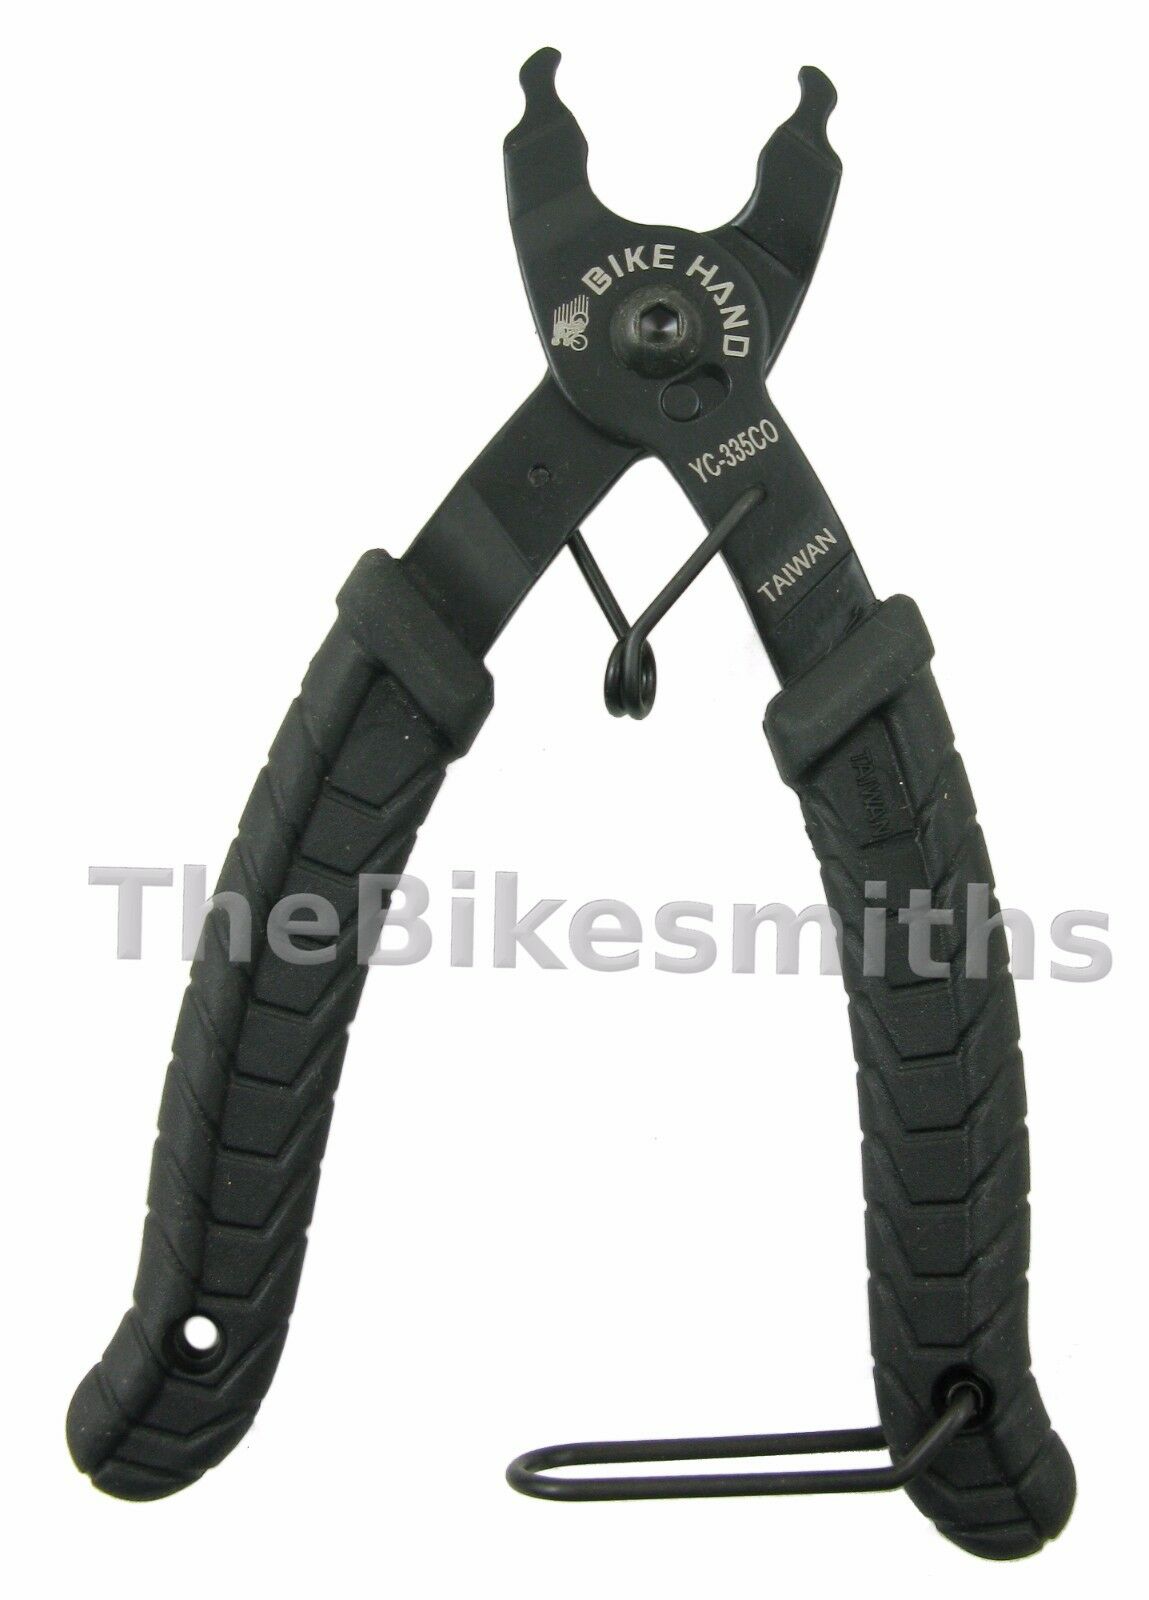 Bike Hand Pro Master Link Pliers Bike Chain Tool Yc-335co Fit Mlp-1 Sram Shimano